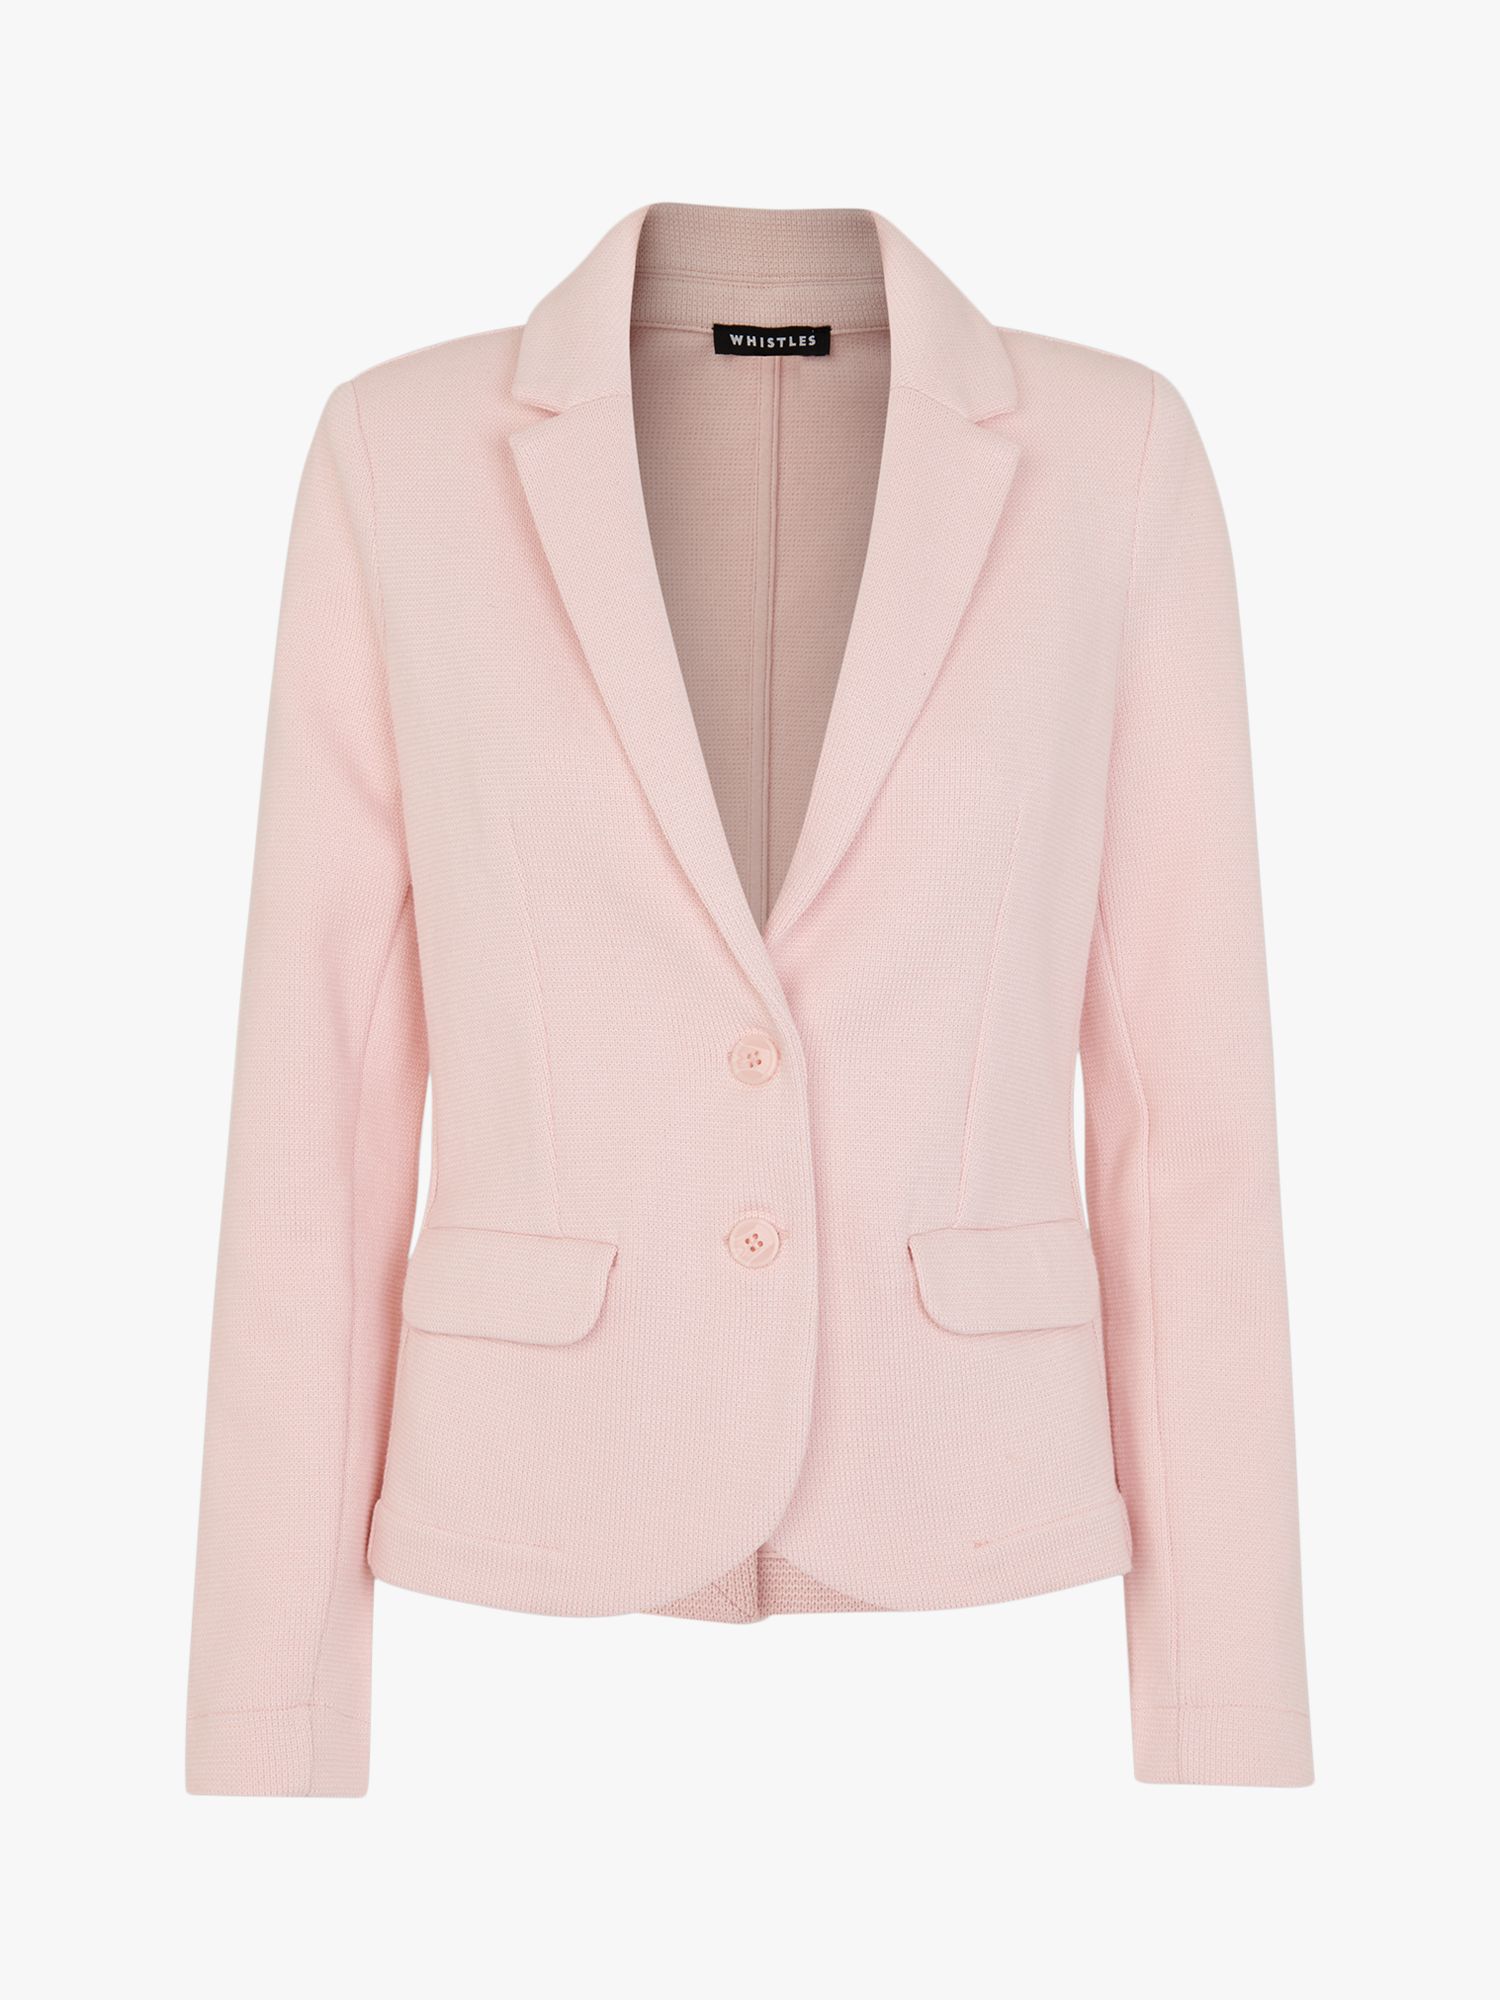 Whistles Slim Fit Jersey Jacket, Pale Pink, 6